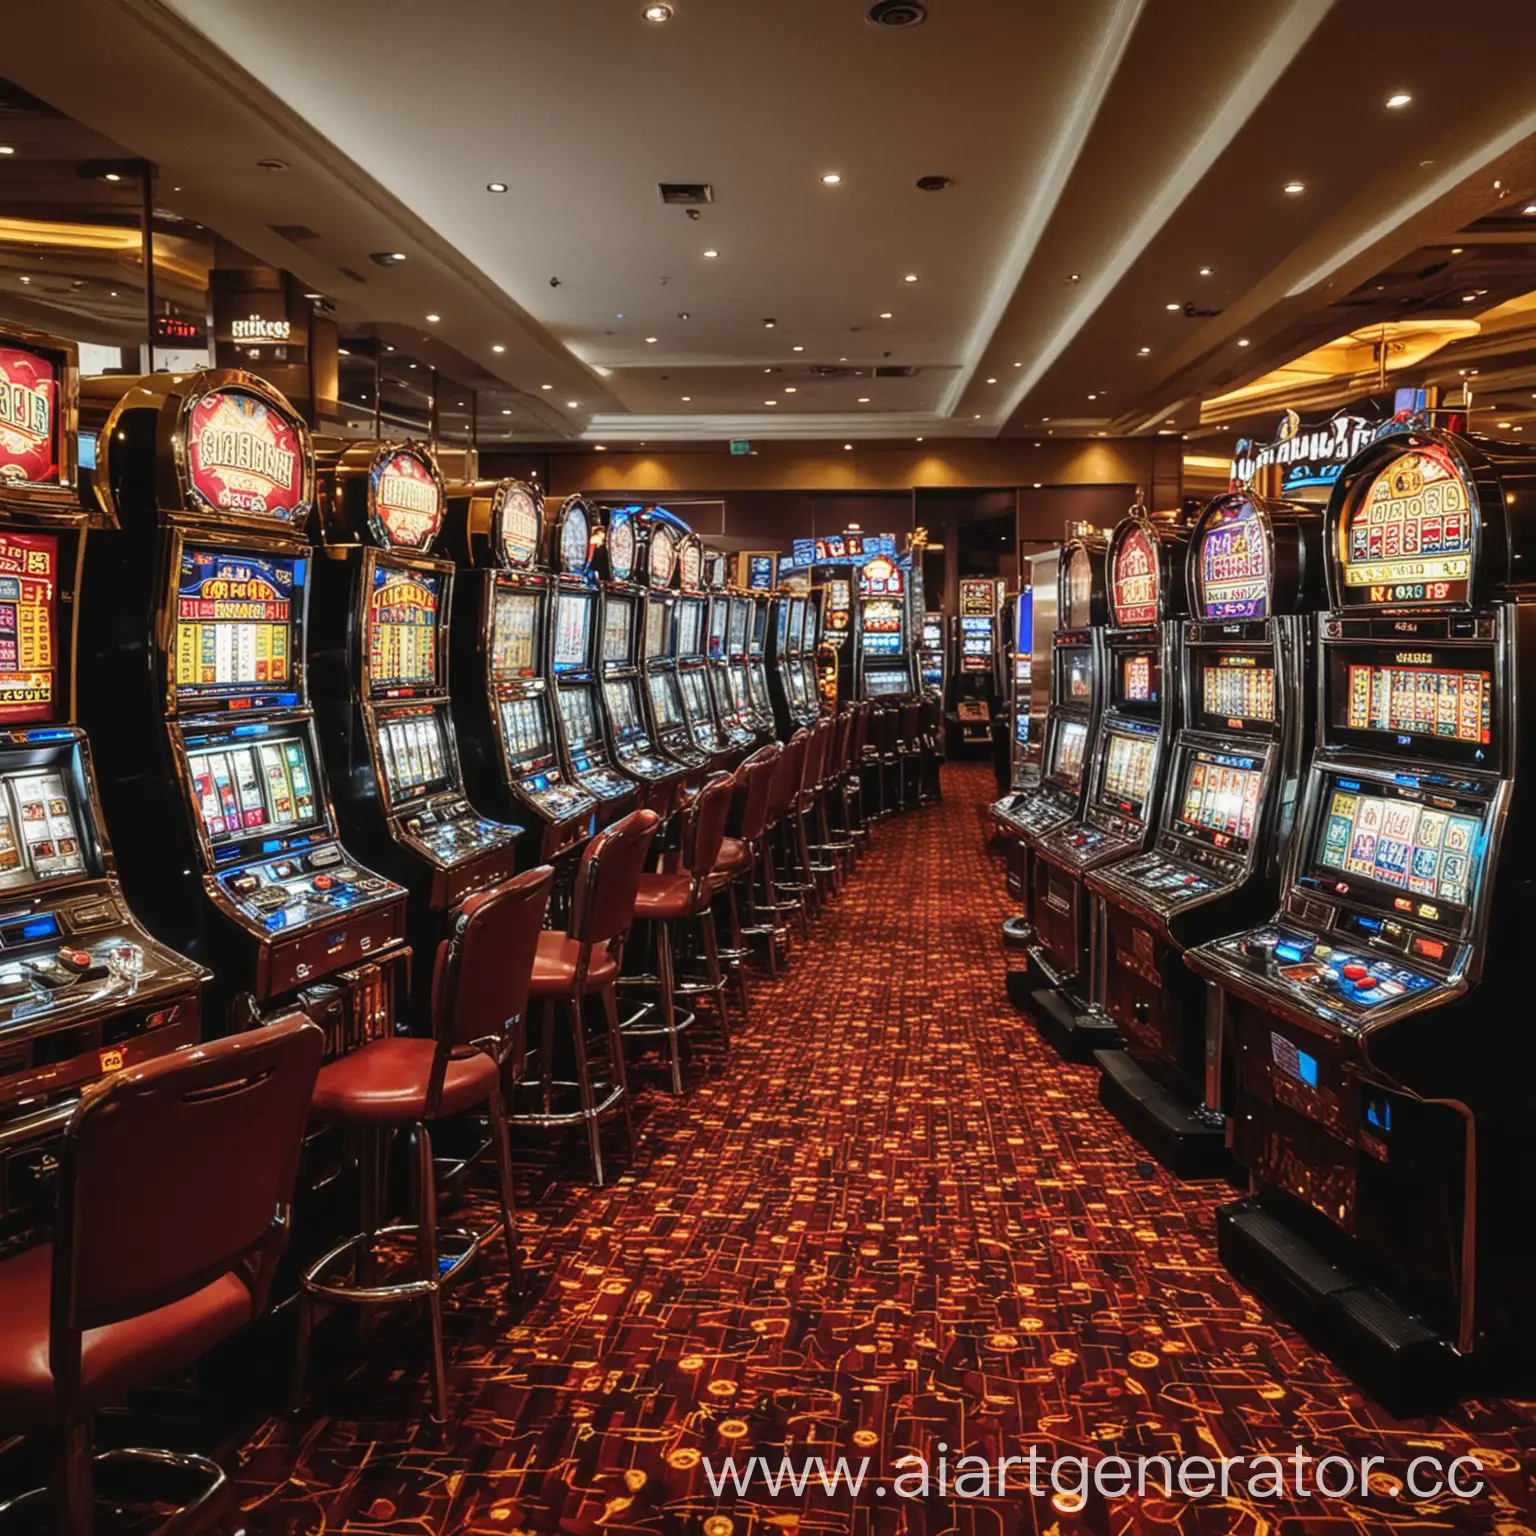 Colorful-Slot-Machines-in-a-Vibrant-Casino-Setting